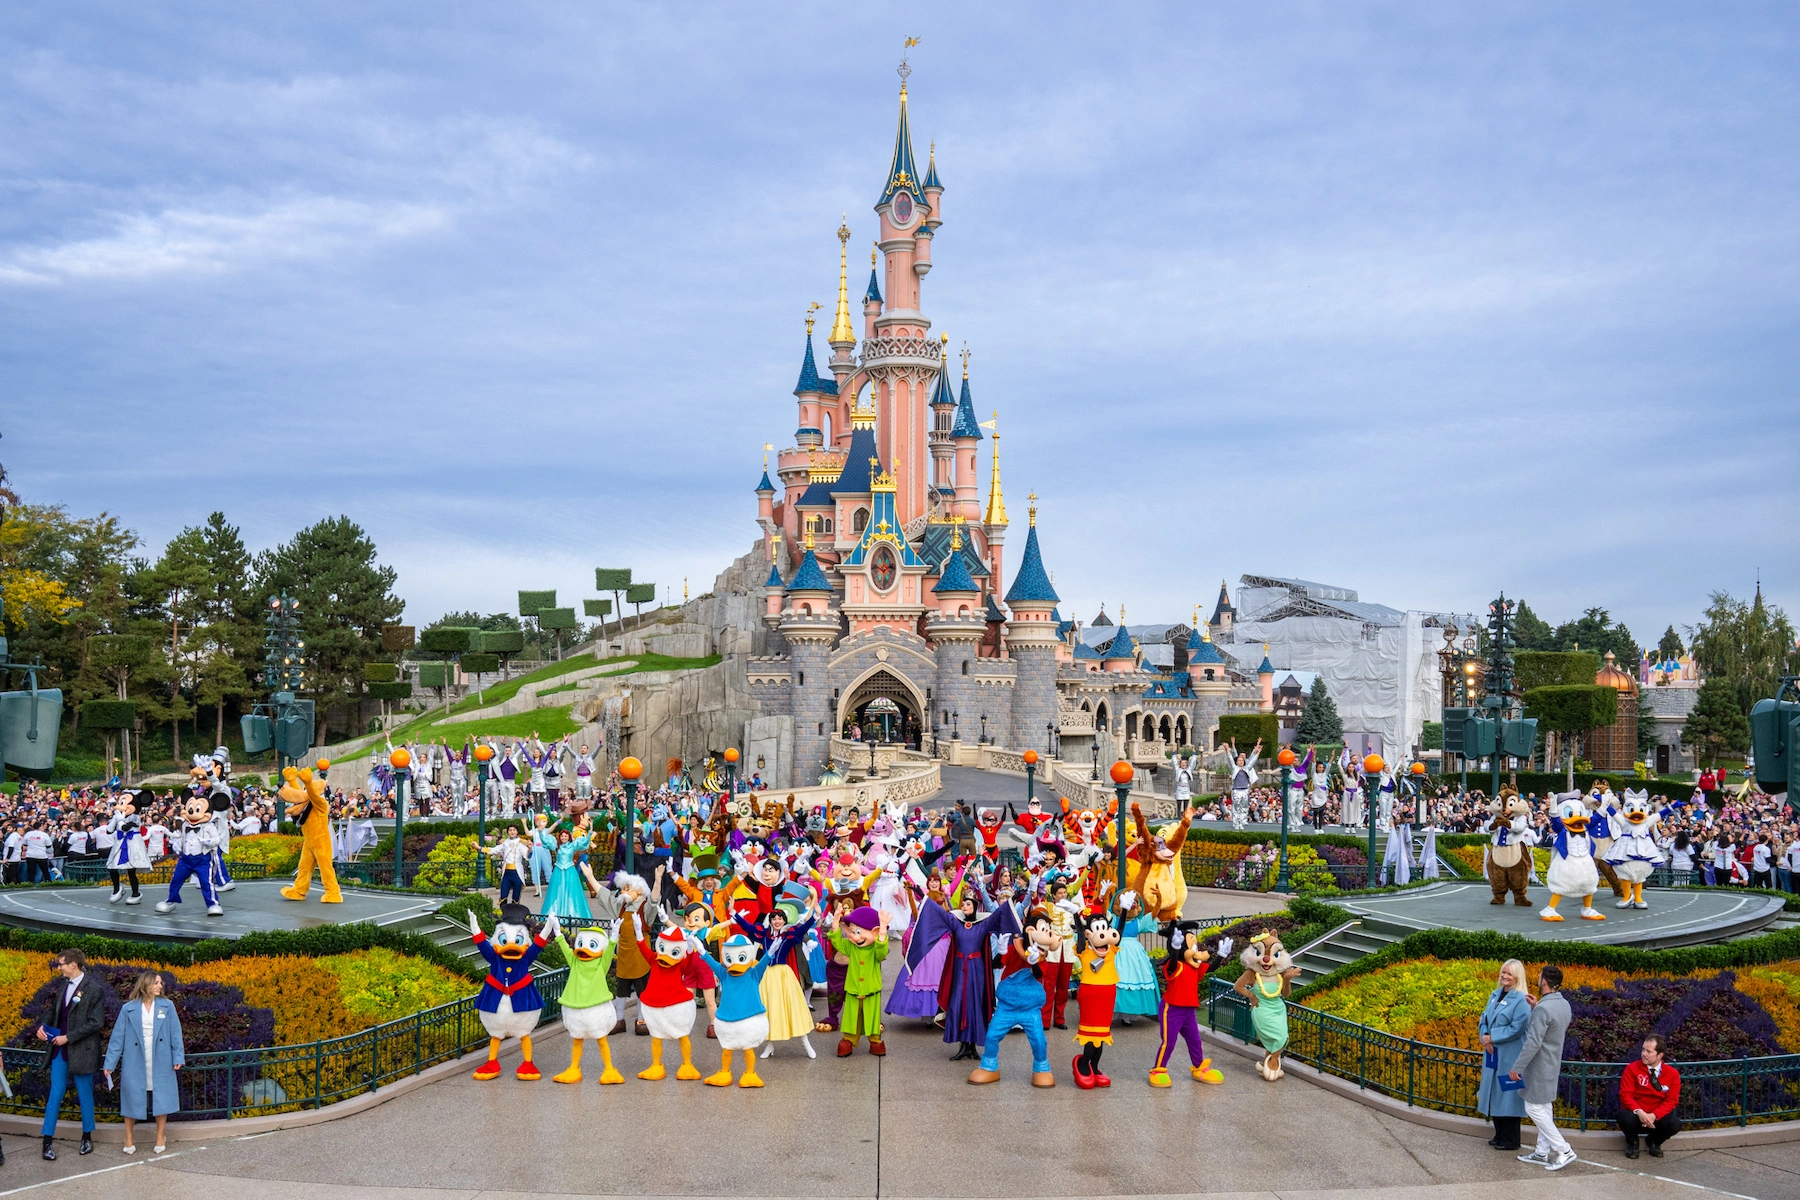 Disneyland Paris: The Charm of Disney in Europe